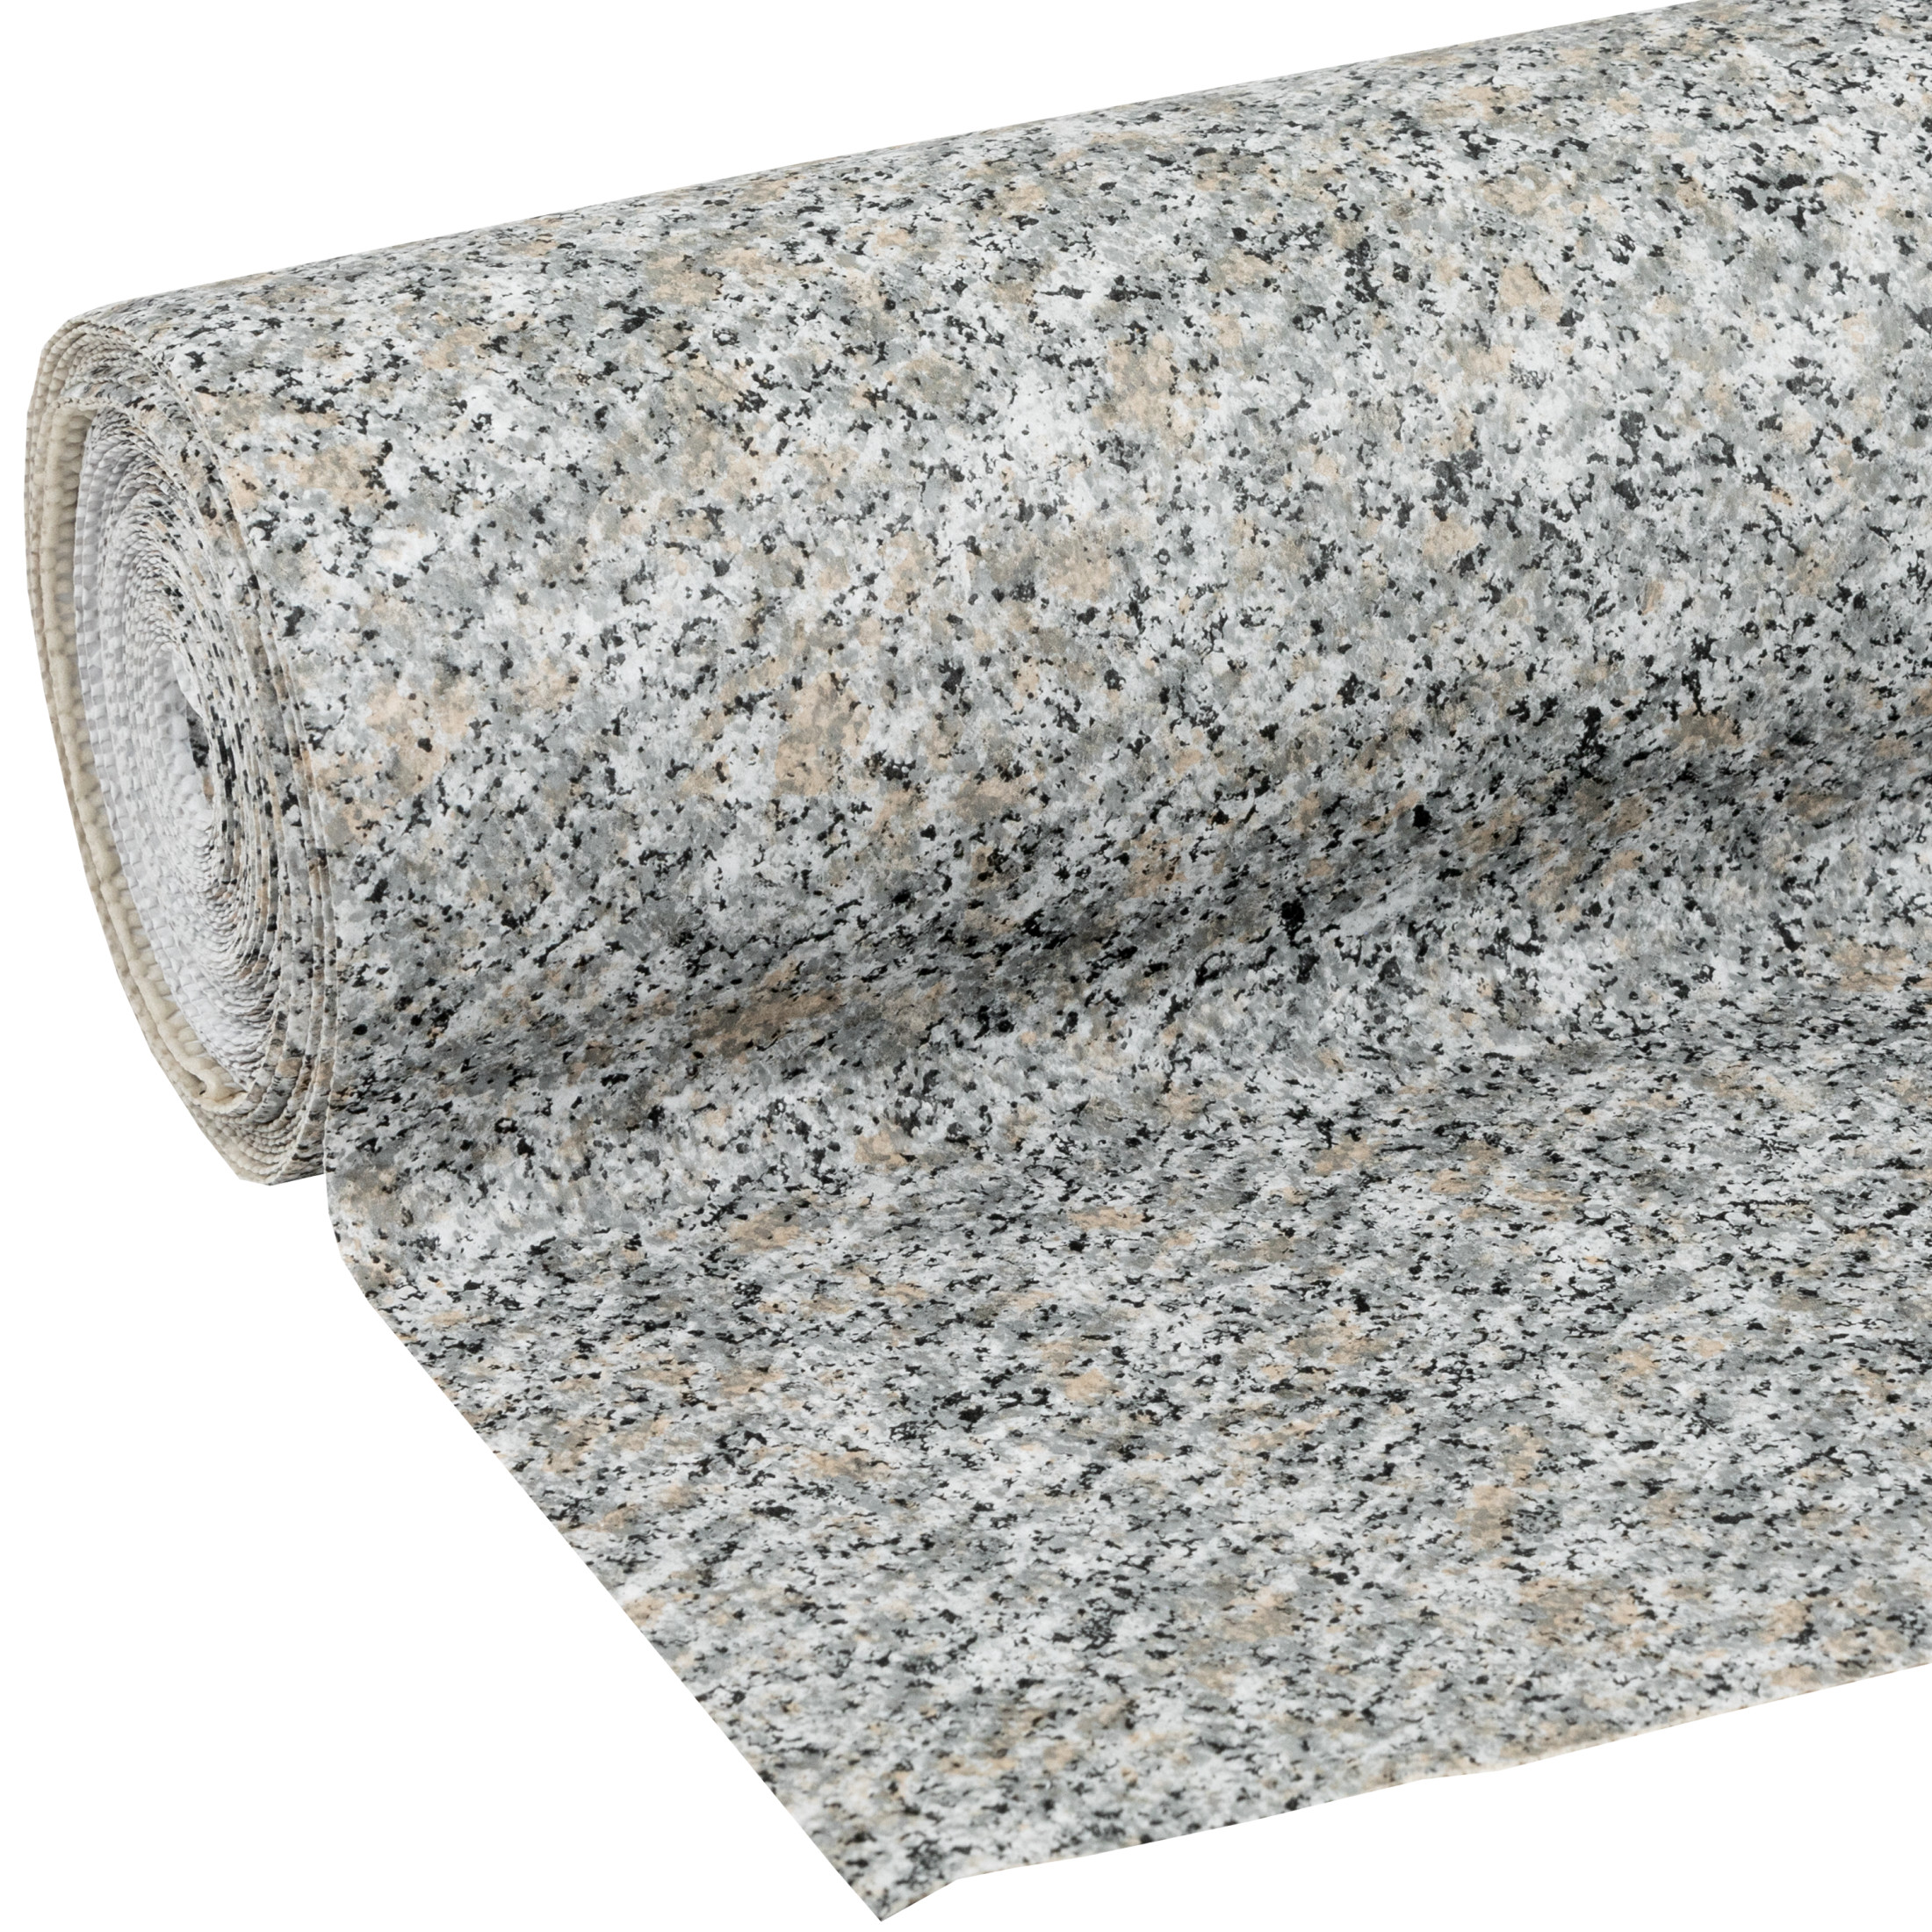 EasyLiner Smooth Top Shelf Liner, Grey Granite, 12 in. x 30 ft. Roll - image 1 of 11